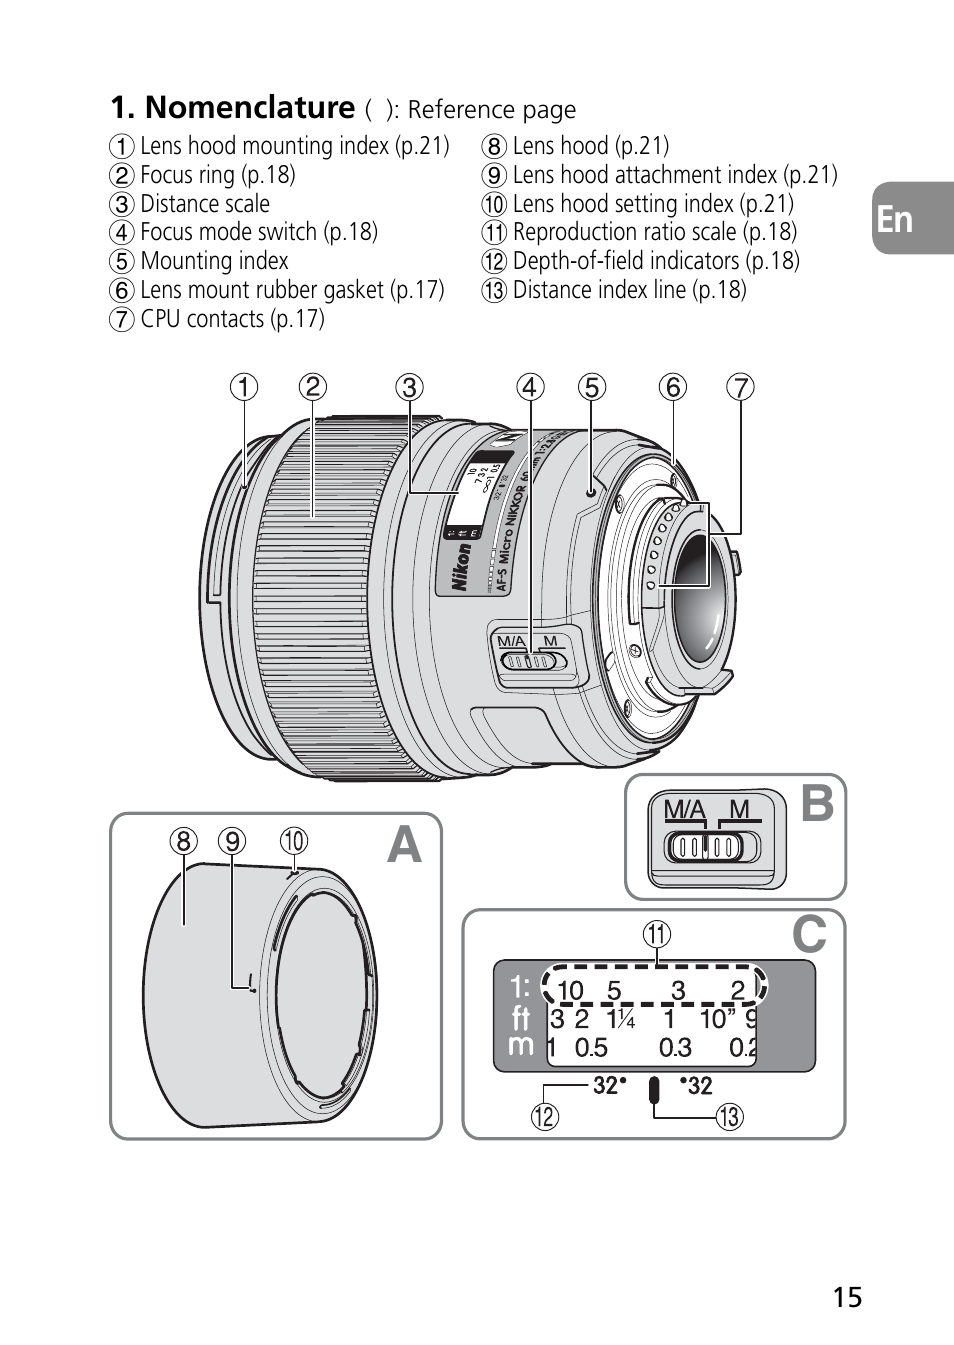 Ab c | Nikon AF-S Micro-NIKKOR 60mm f-2.8G ED User Manual | Page 15 / 154